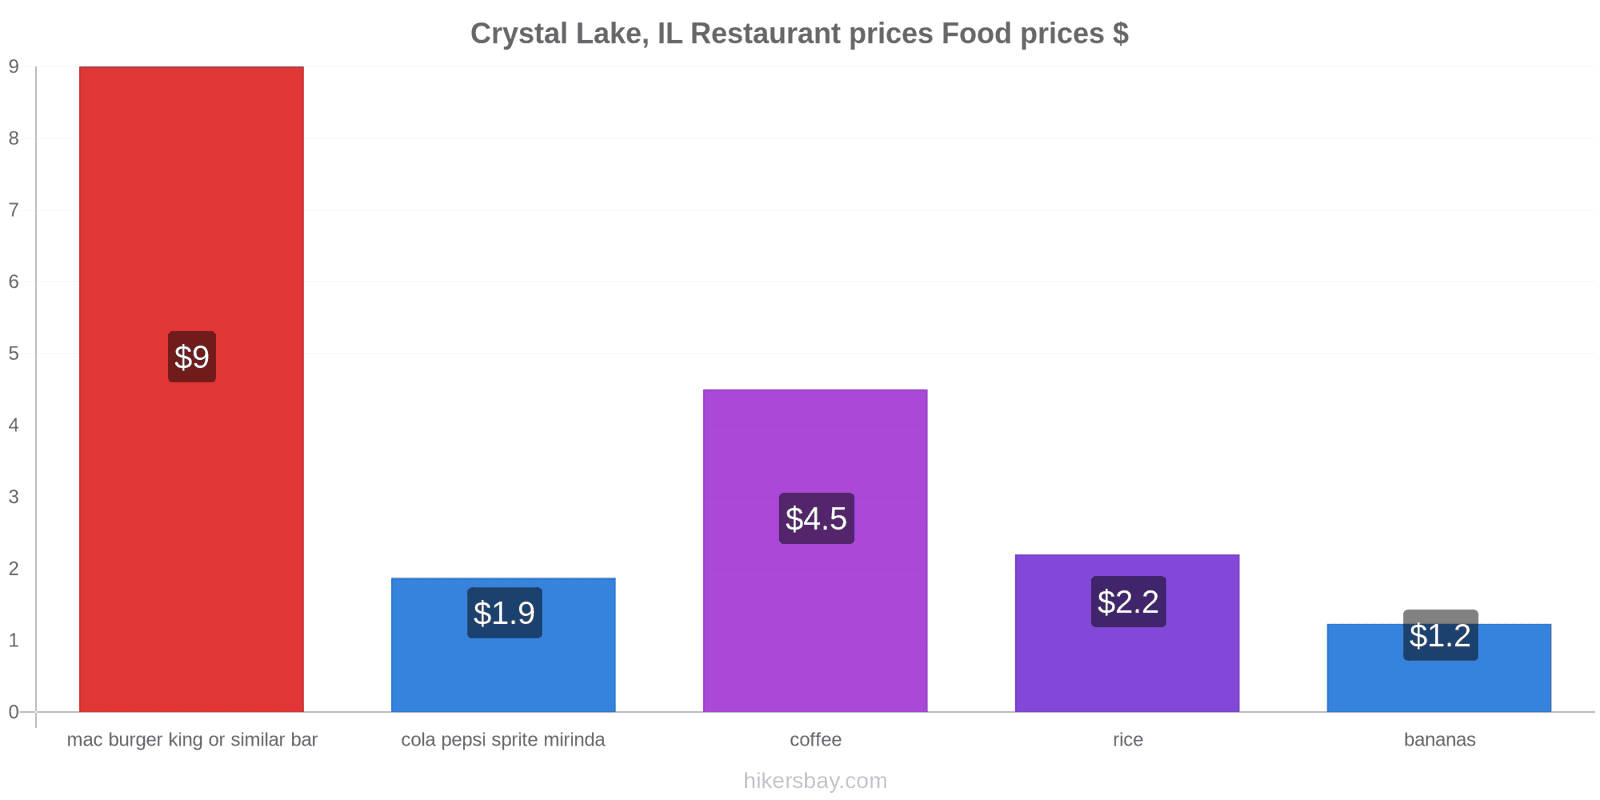 Crystal Lake, IL price changes hikersbay.com